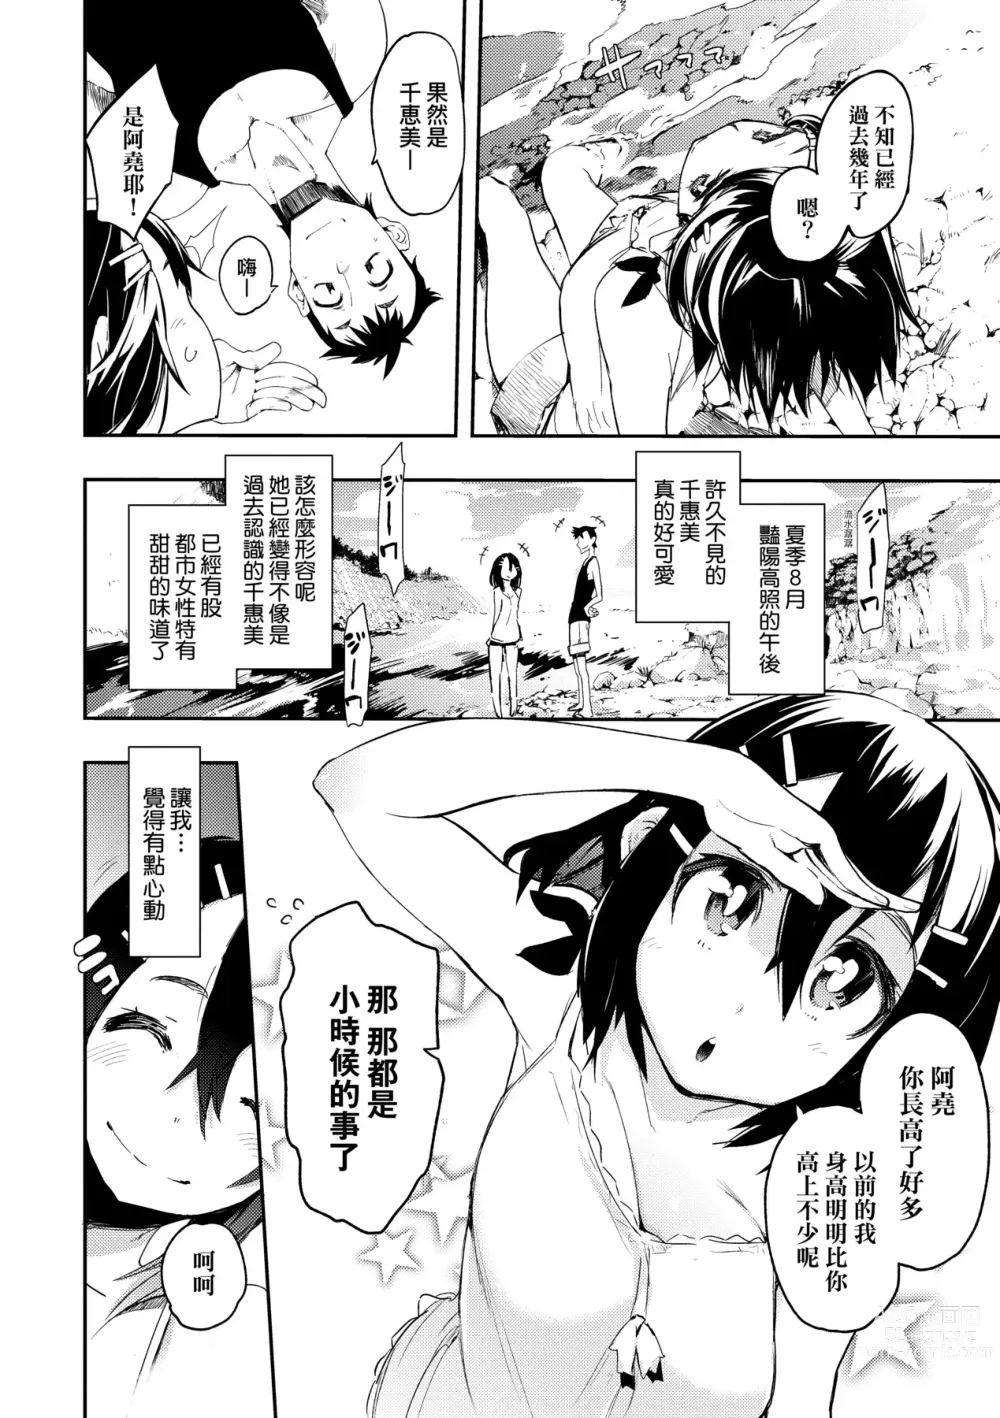 Page 199 of manga 眼眸令我陶醉 (decensored)